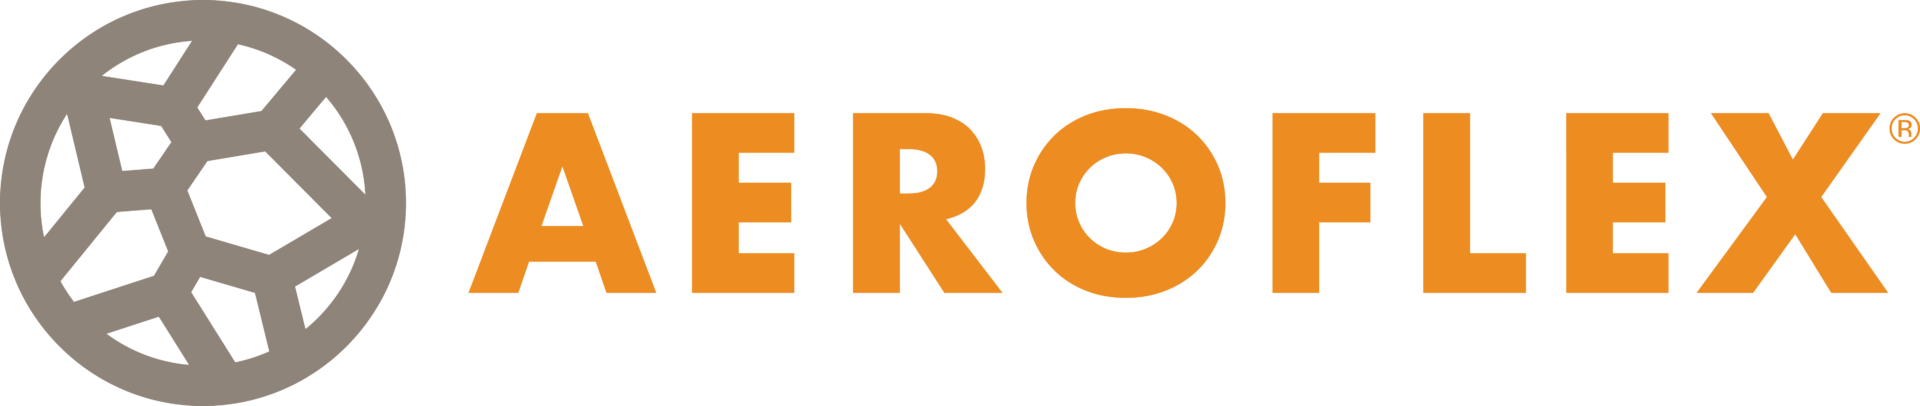 Aeroflex-Logo-Orange